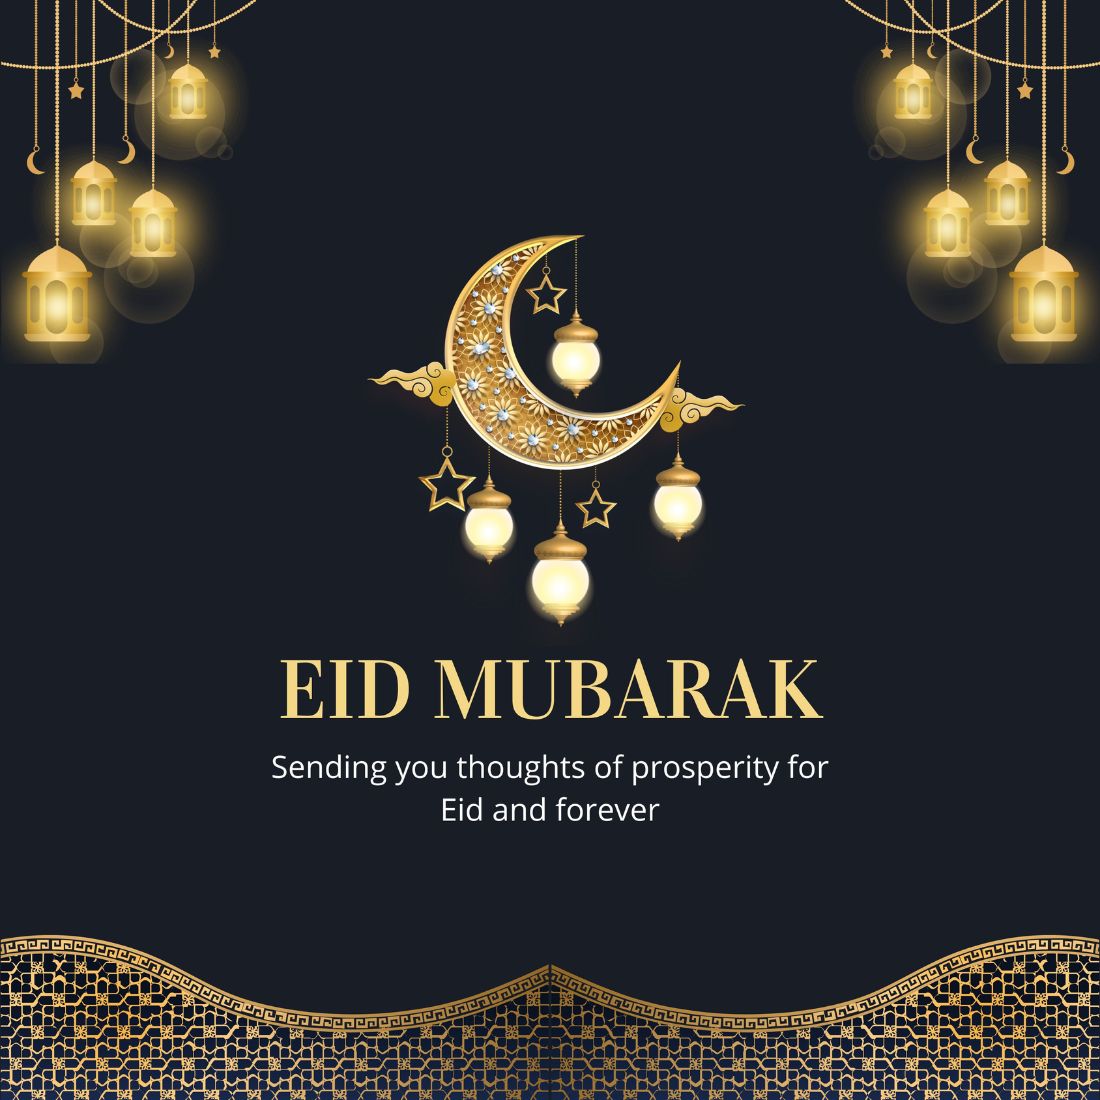 NEW Eid Mubarak Instagram Post Template cover image.